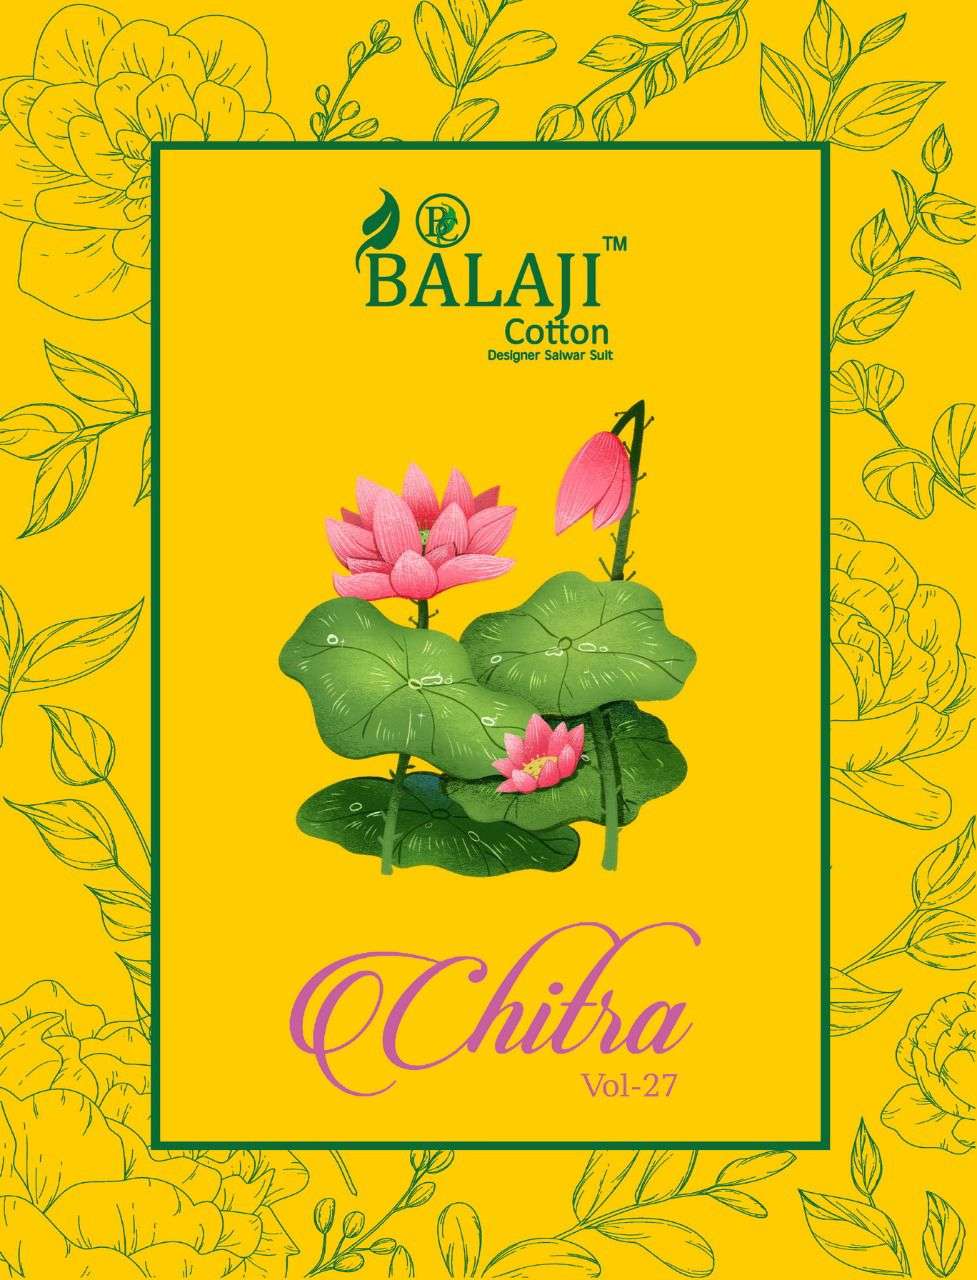 Balaji Chitra Vol-27 series 2701-2712 pure cotton suit